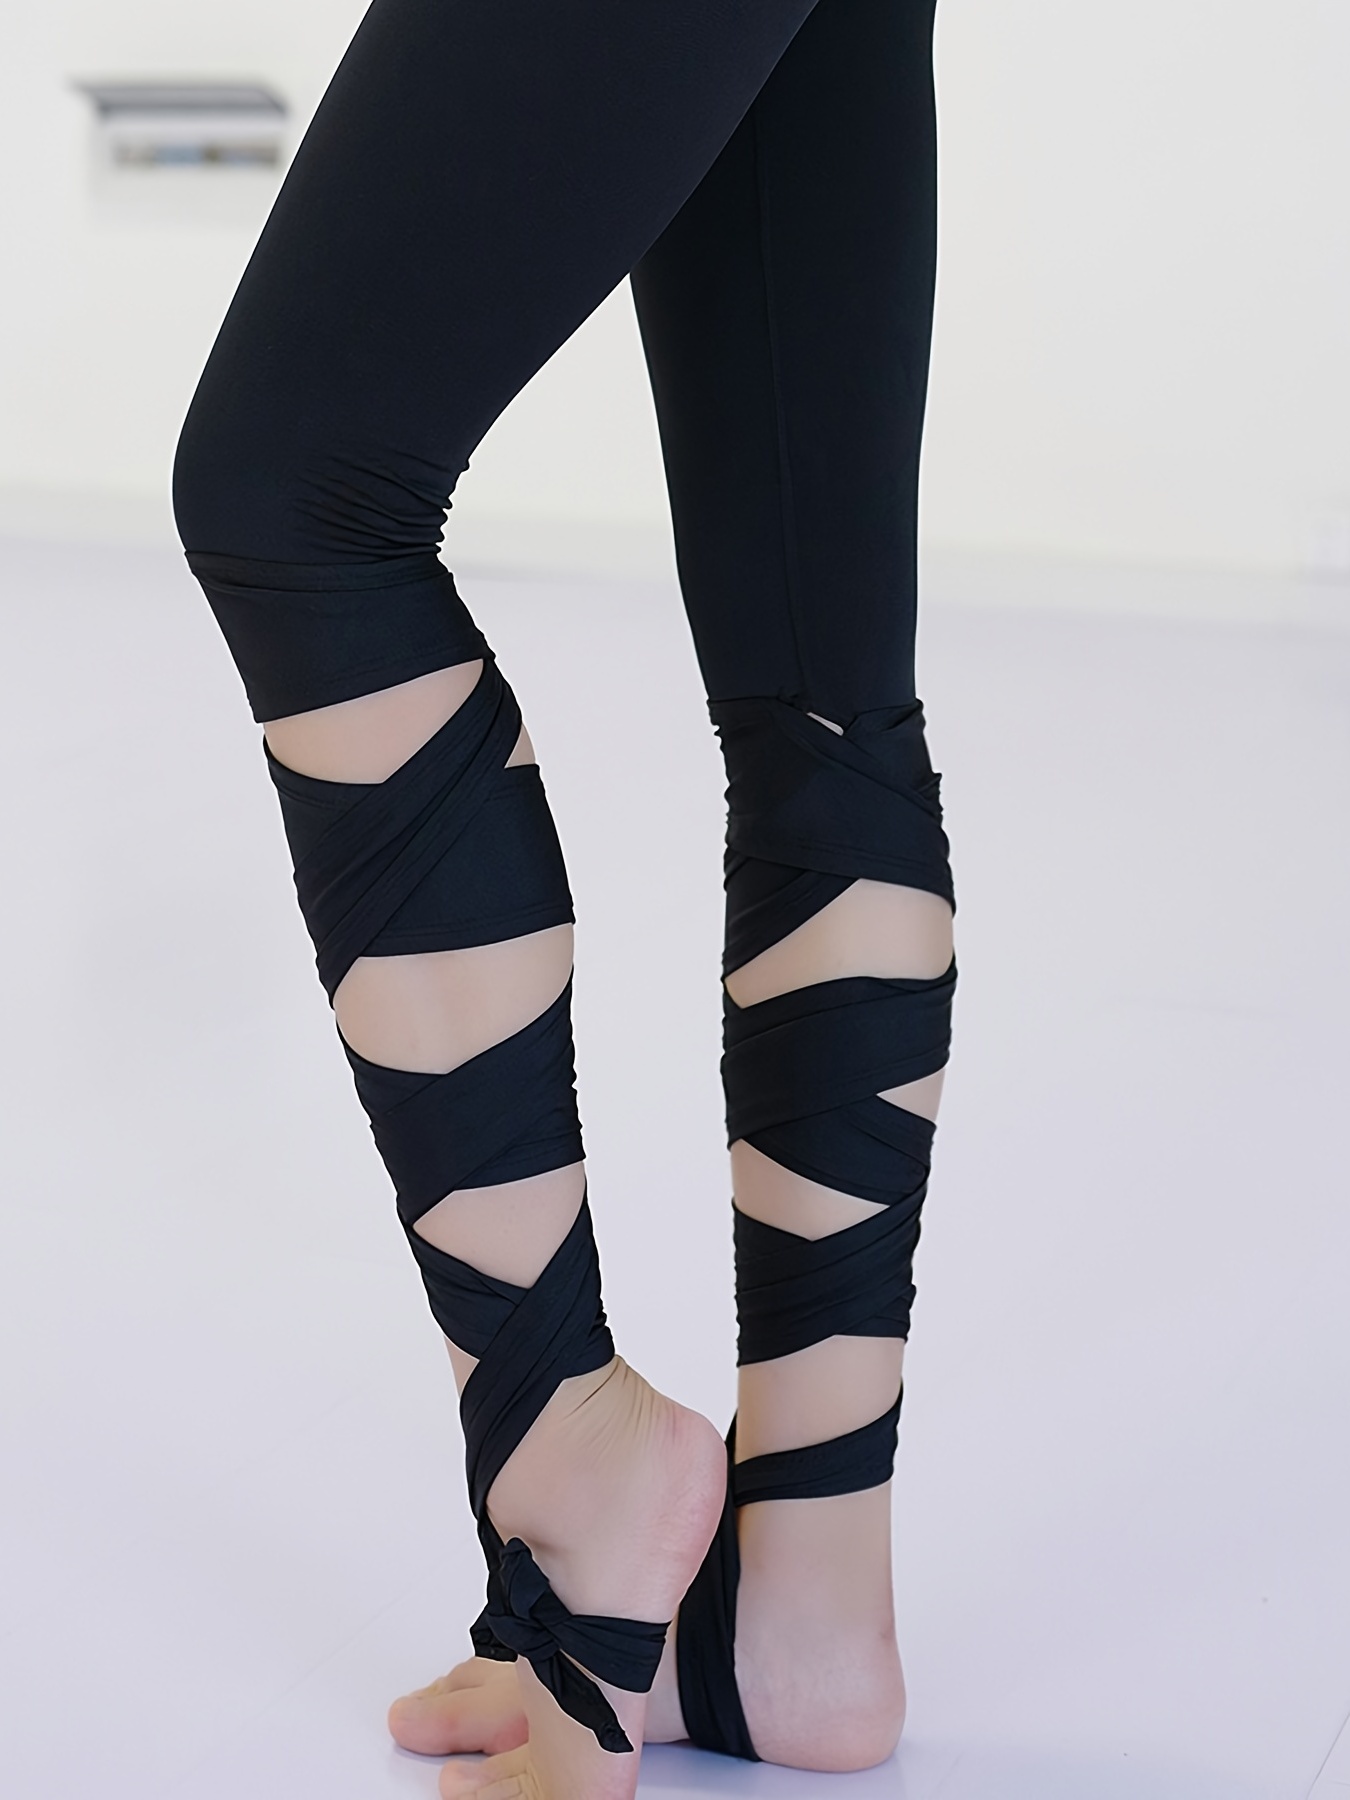 Black Cross tights by BALLERINA brand